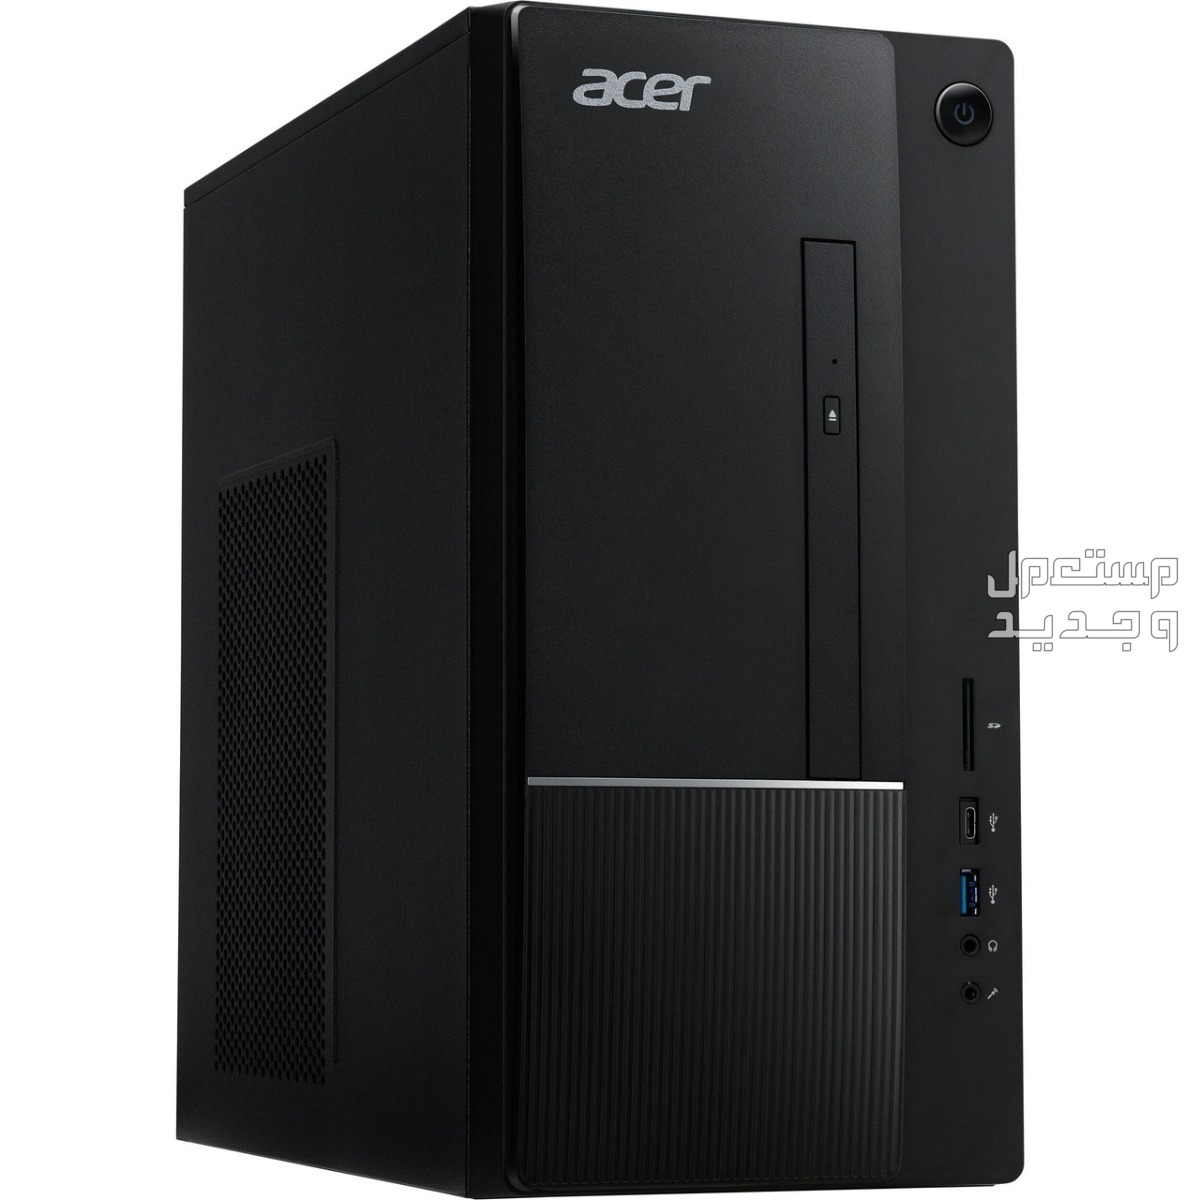 تعرف على جهاز كمبيوتر مكتبي Acer Aspire TC-885-UA91 Acer Aspire TC-885-UA91